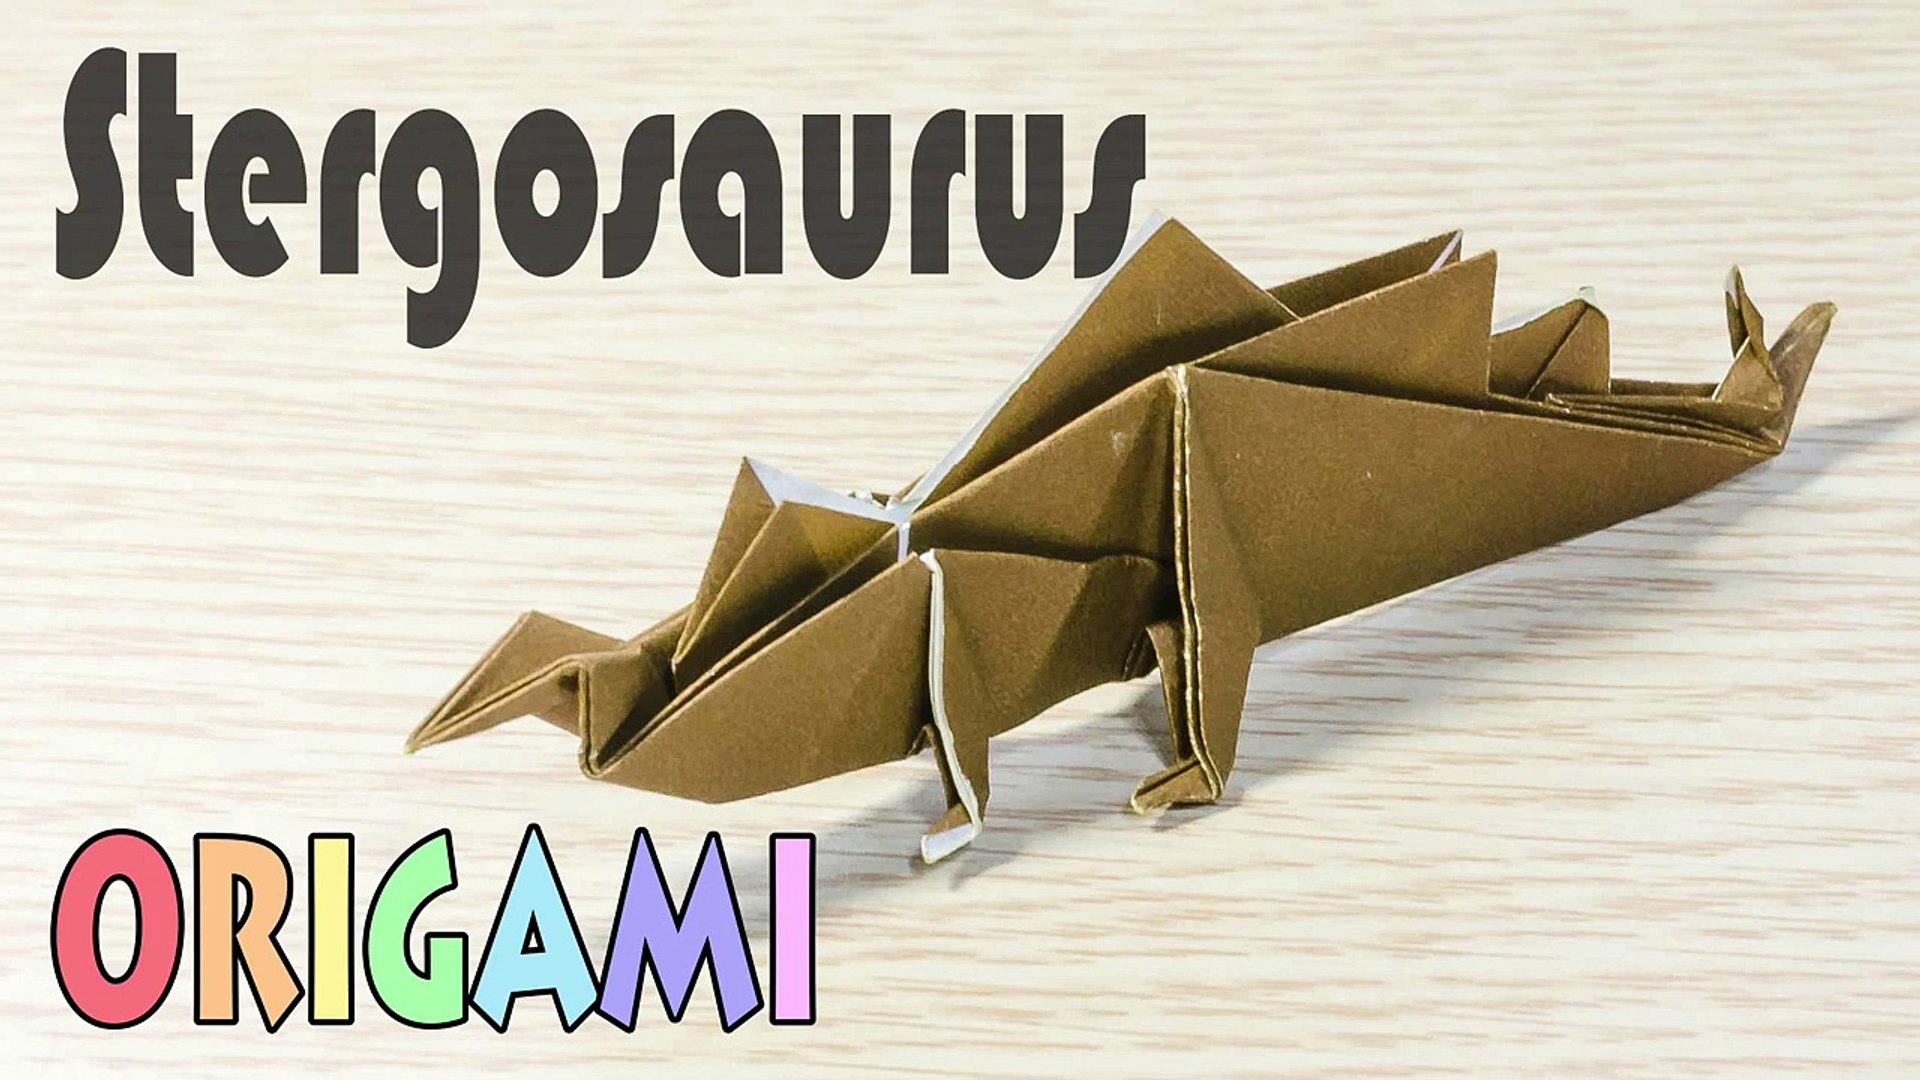 Origami Stergosaurus  - Paper Dinosaur Tutorial-8k